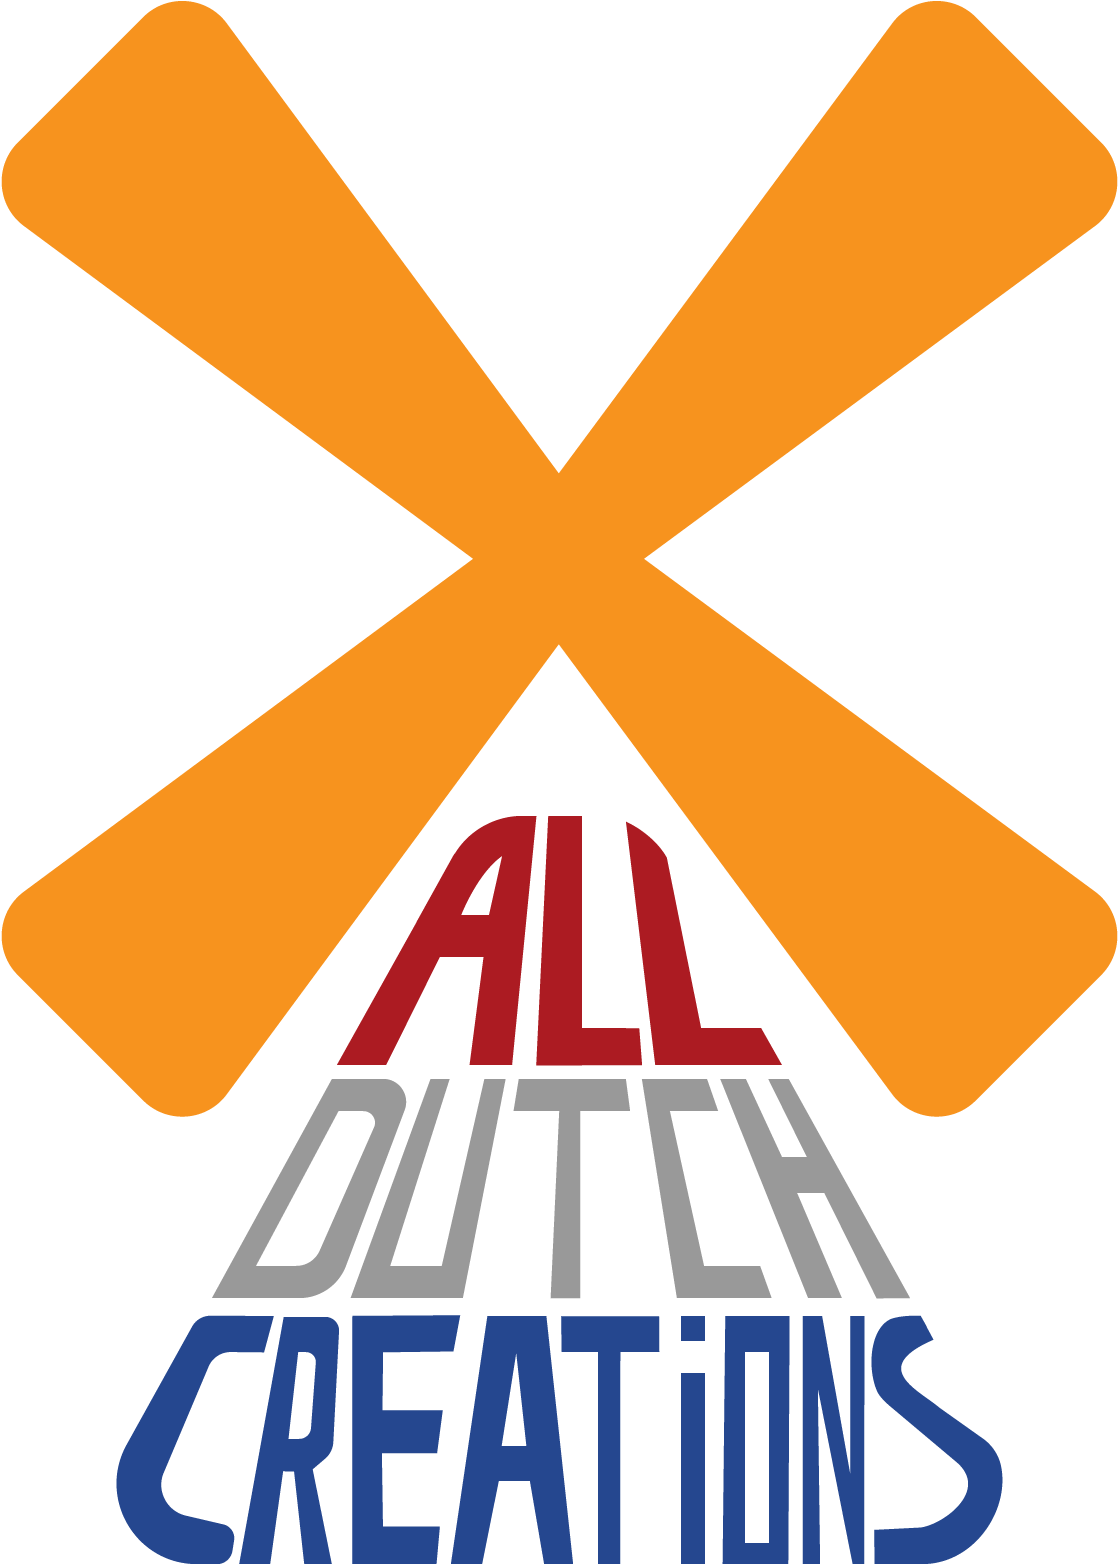 All Dutch Creations Logo PNG